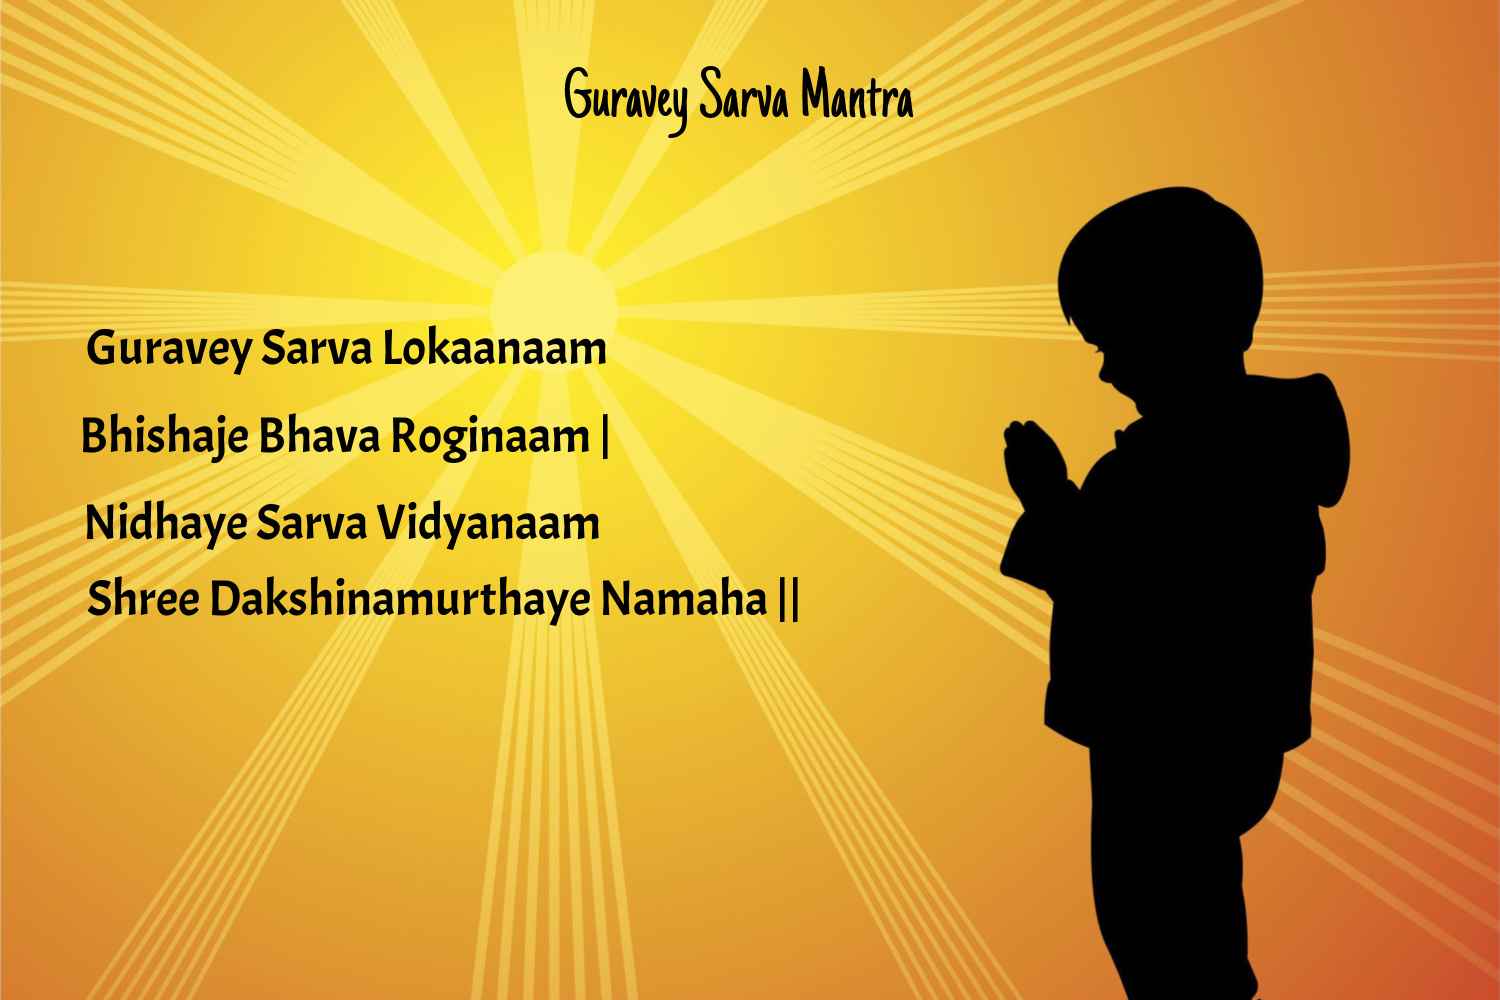 Guravey Sarva Mantra